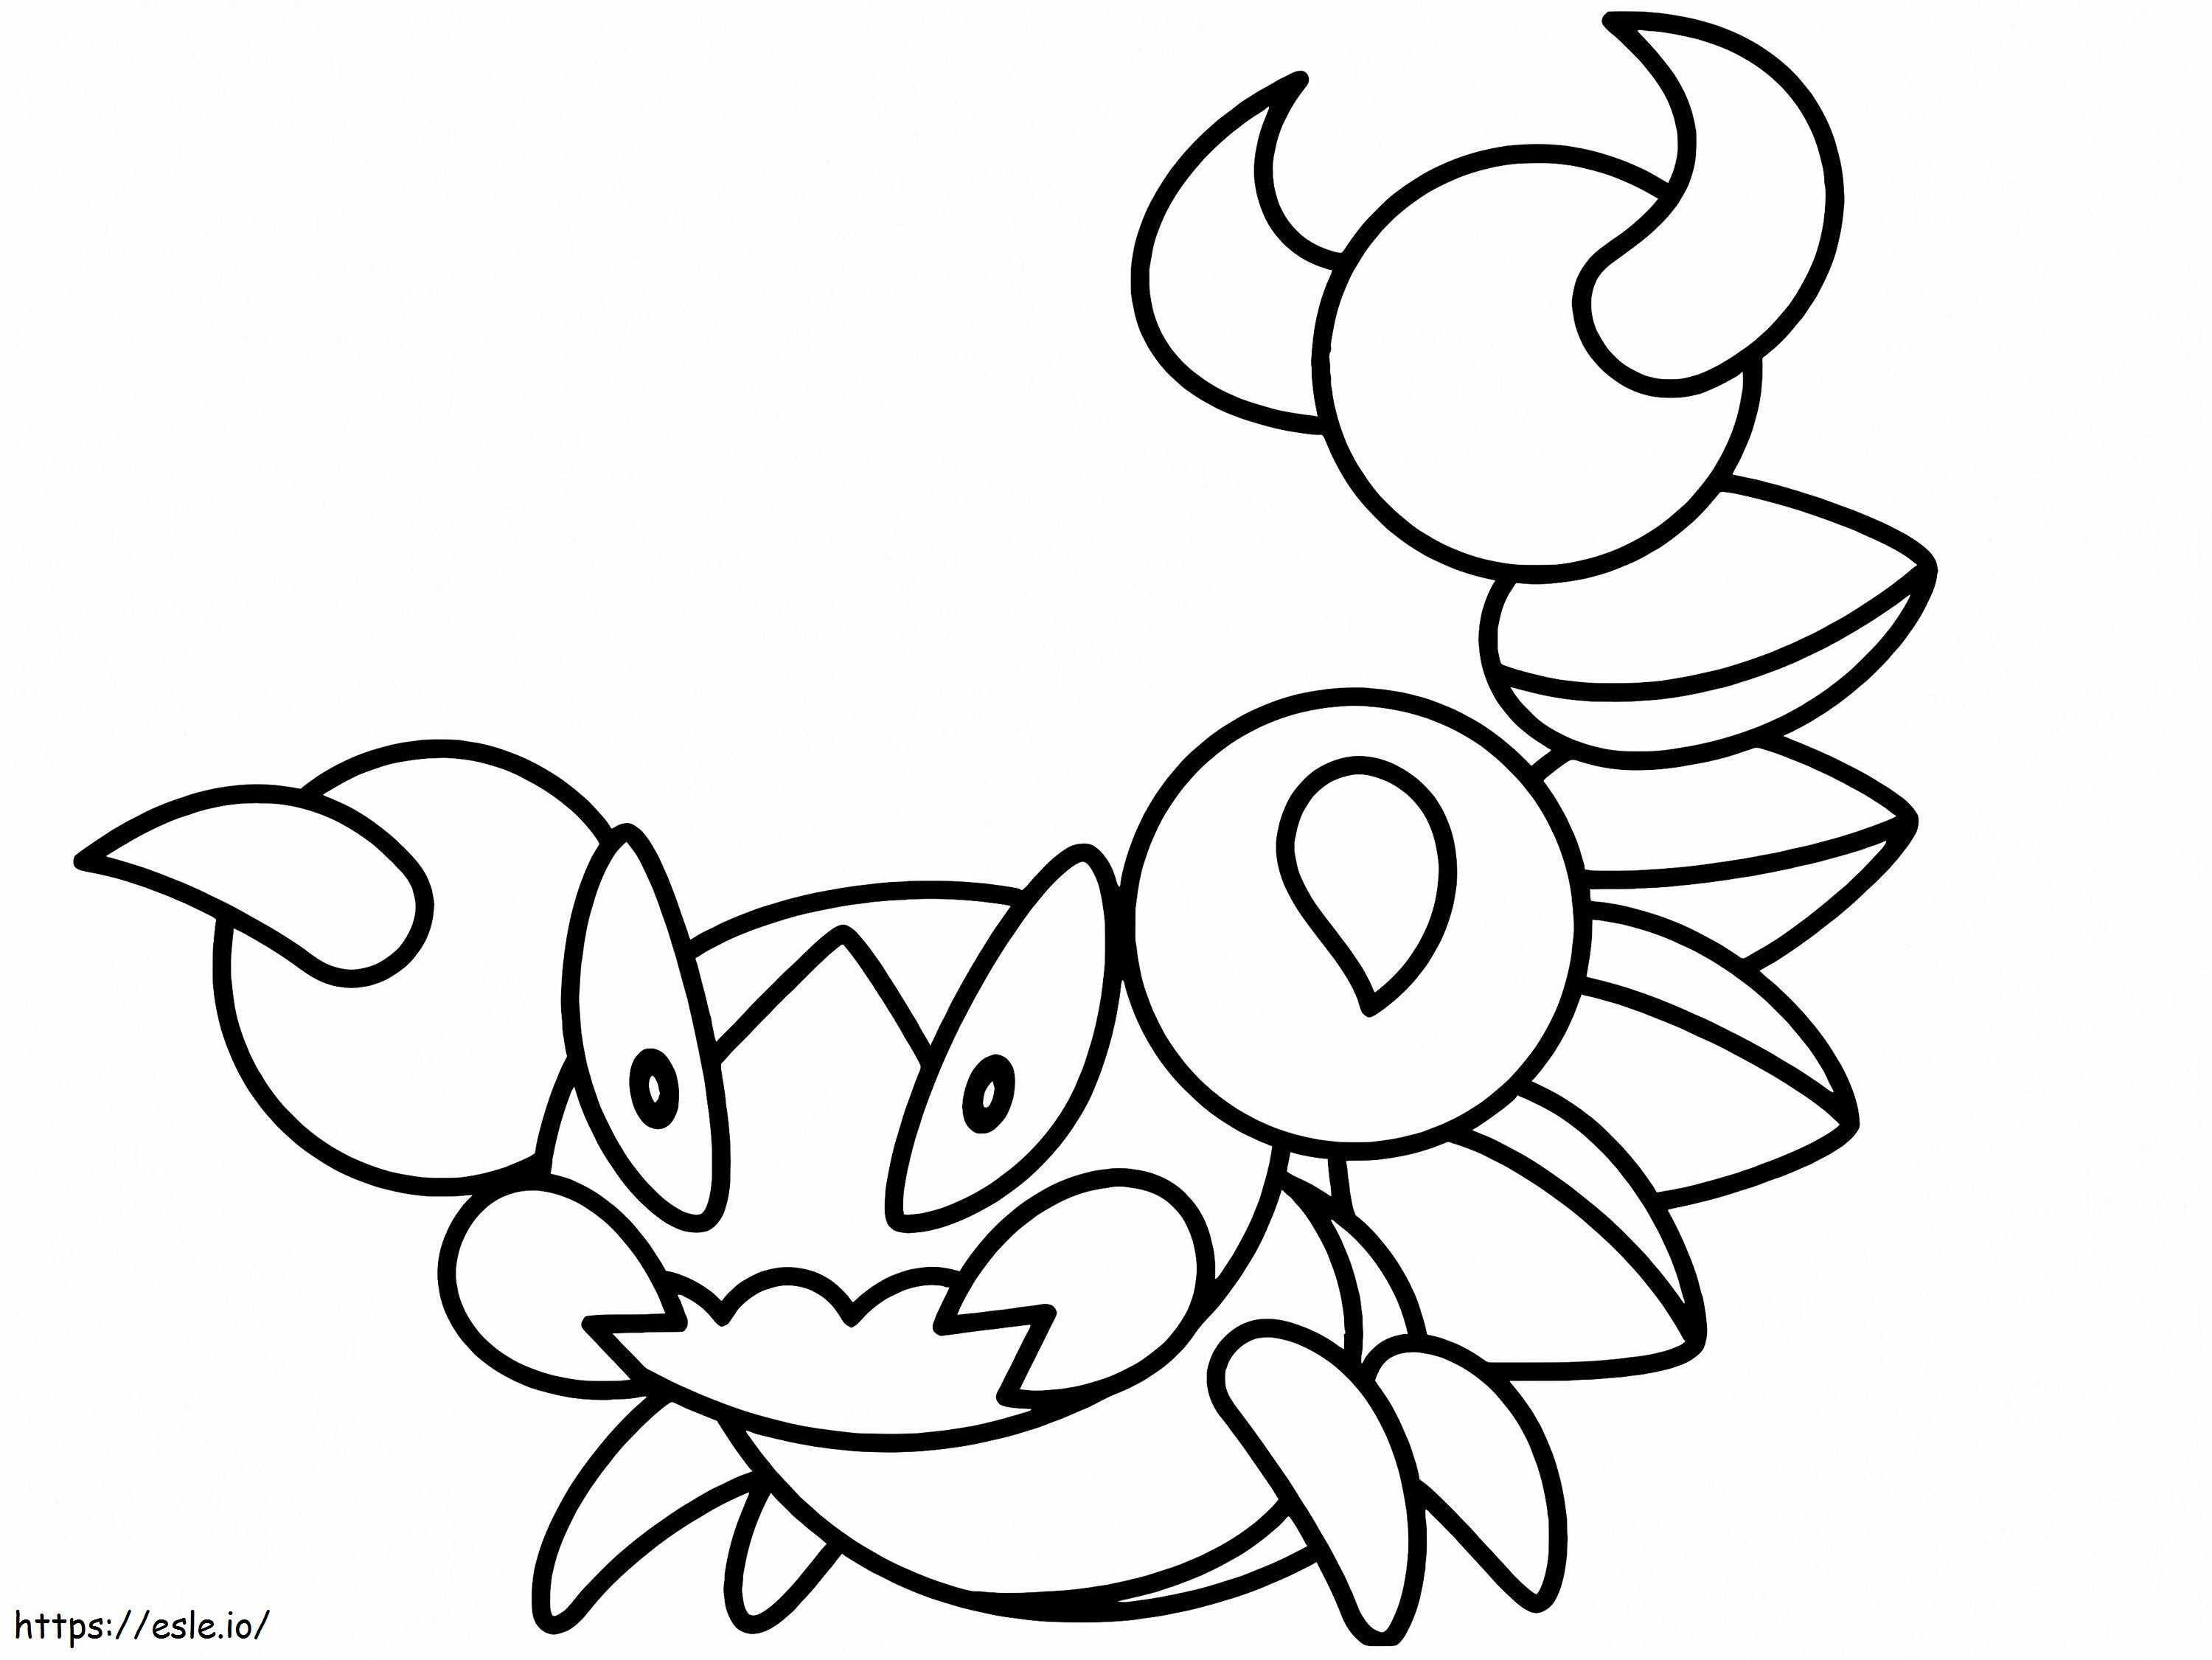 Shell-Pokémon ausmalbilder